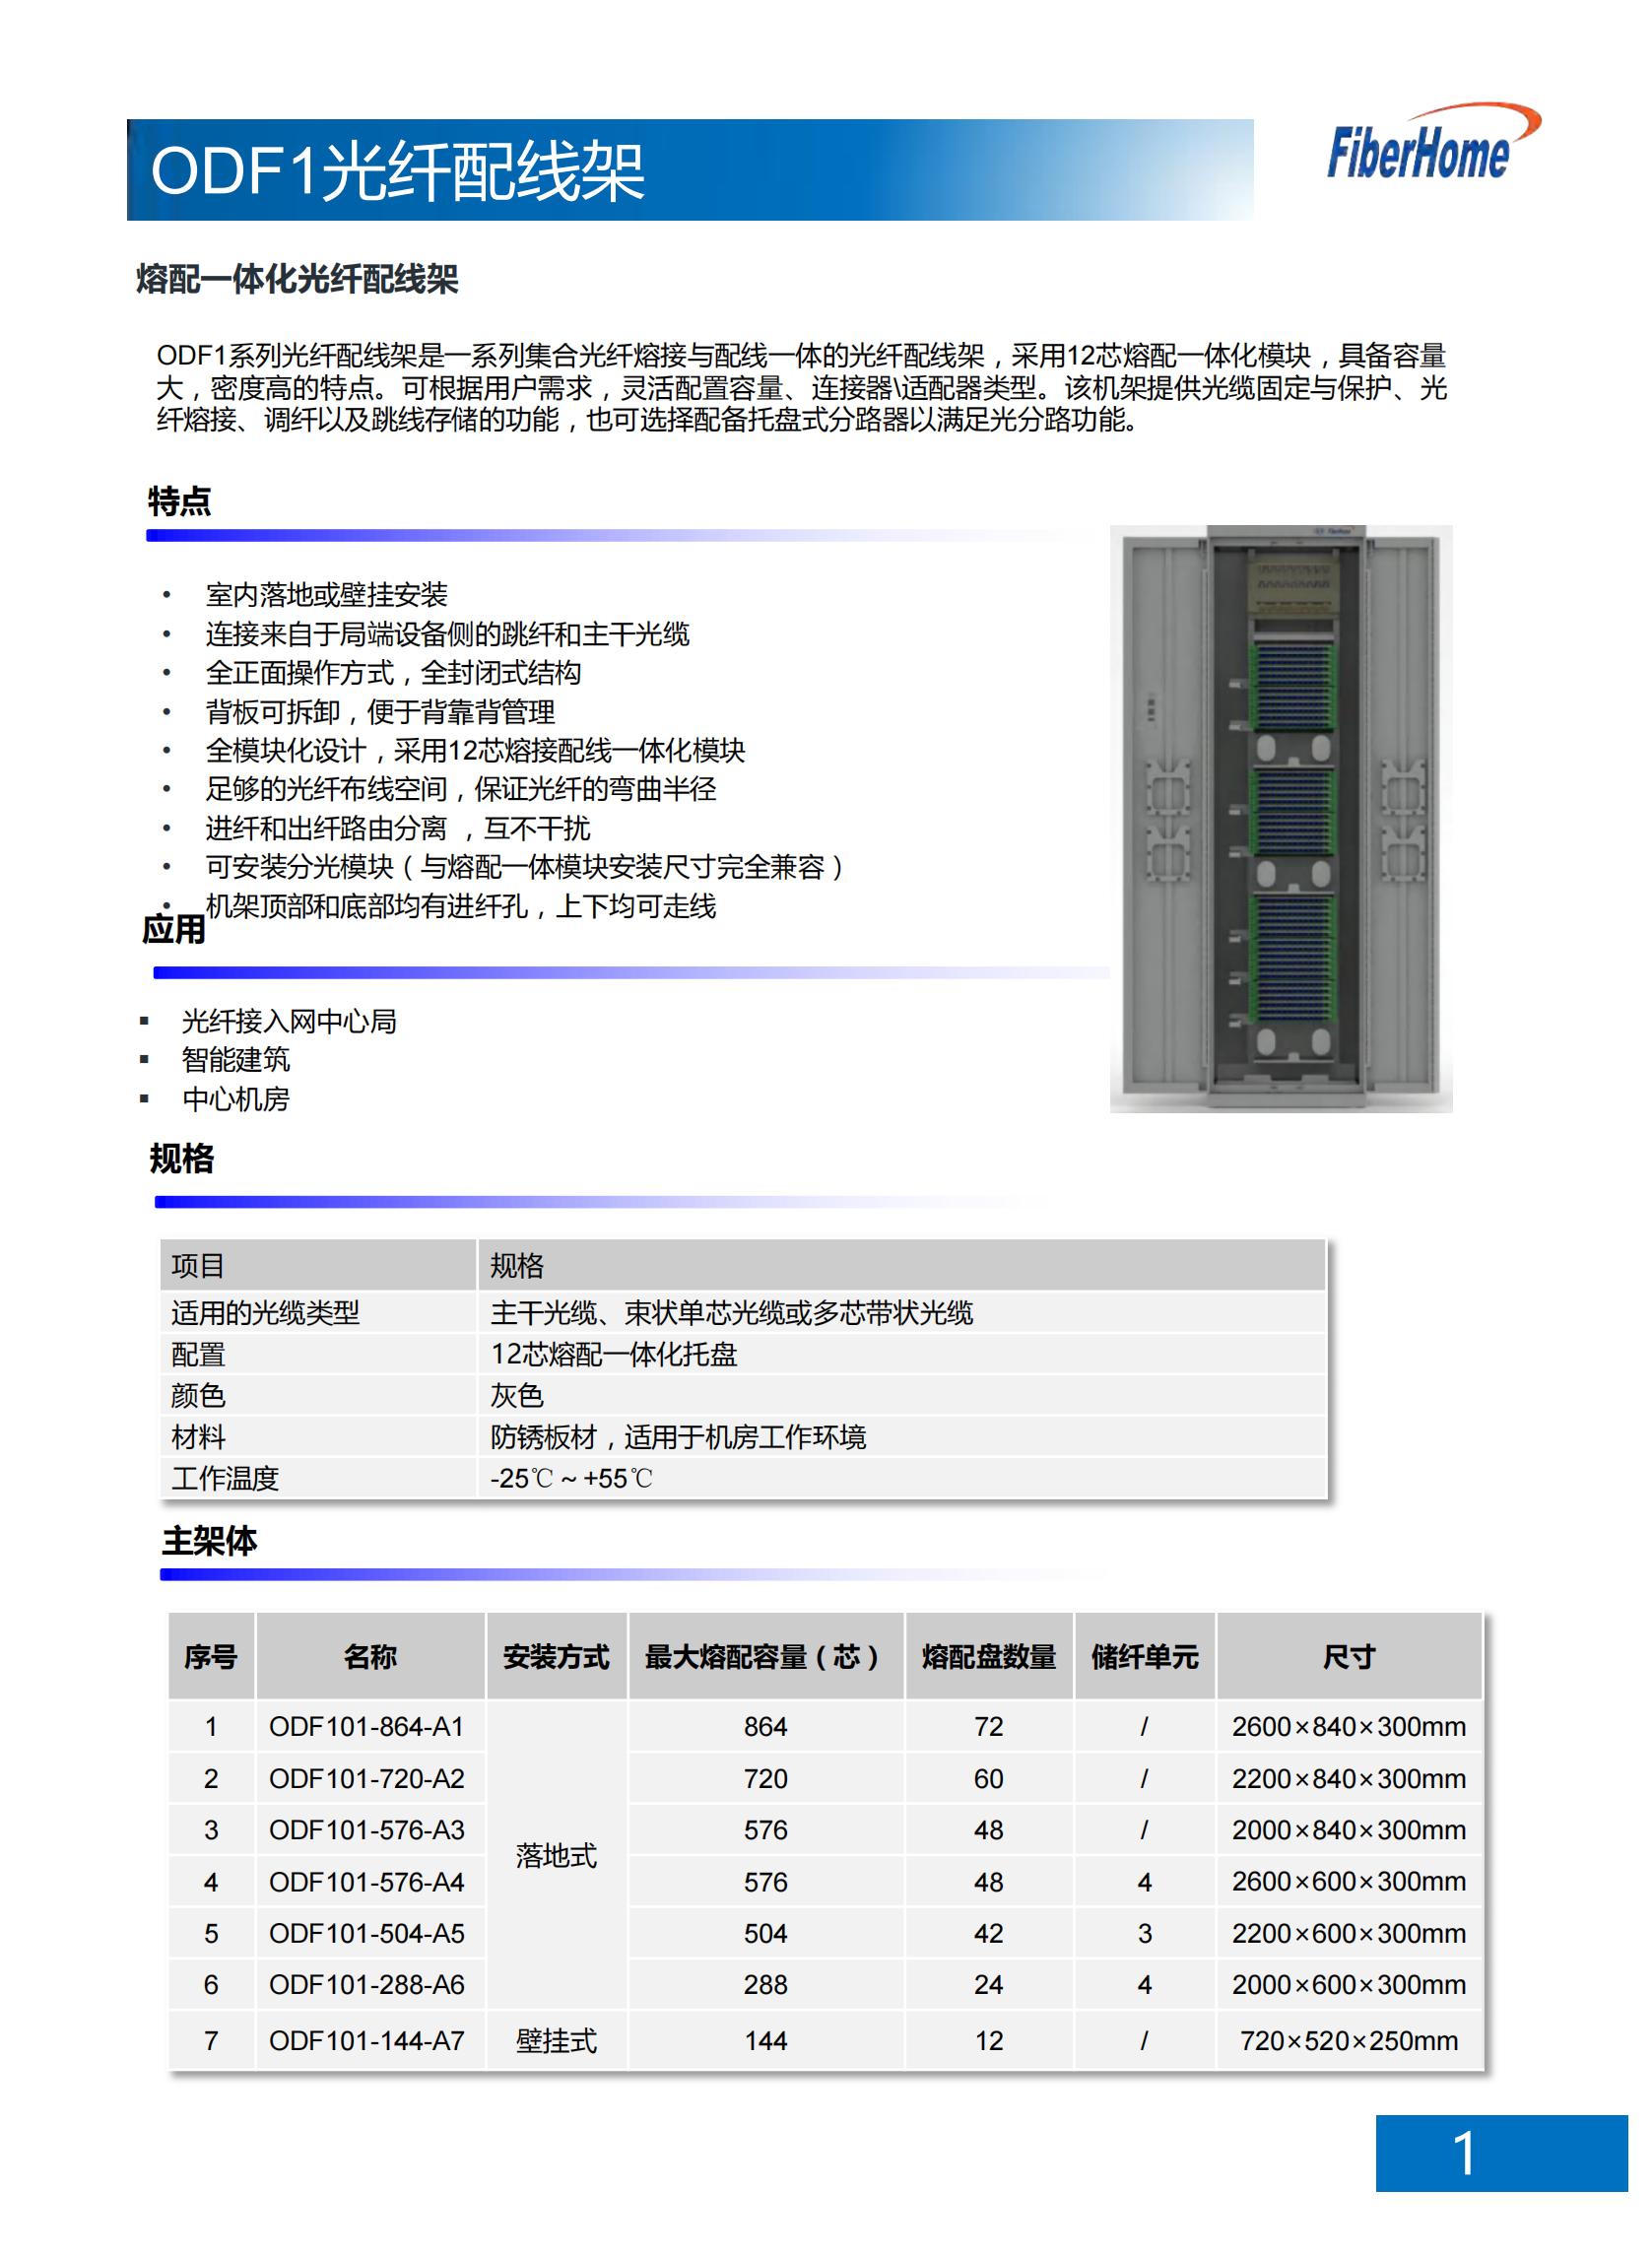 ODF101-144-A7-FC ODF光纤配线架 （144芯璧挂式 全部含12芯FC熔配一体化单元）